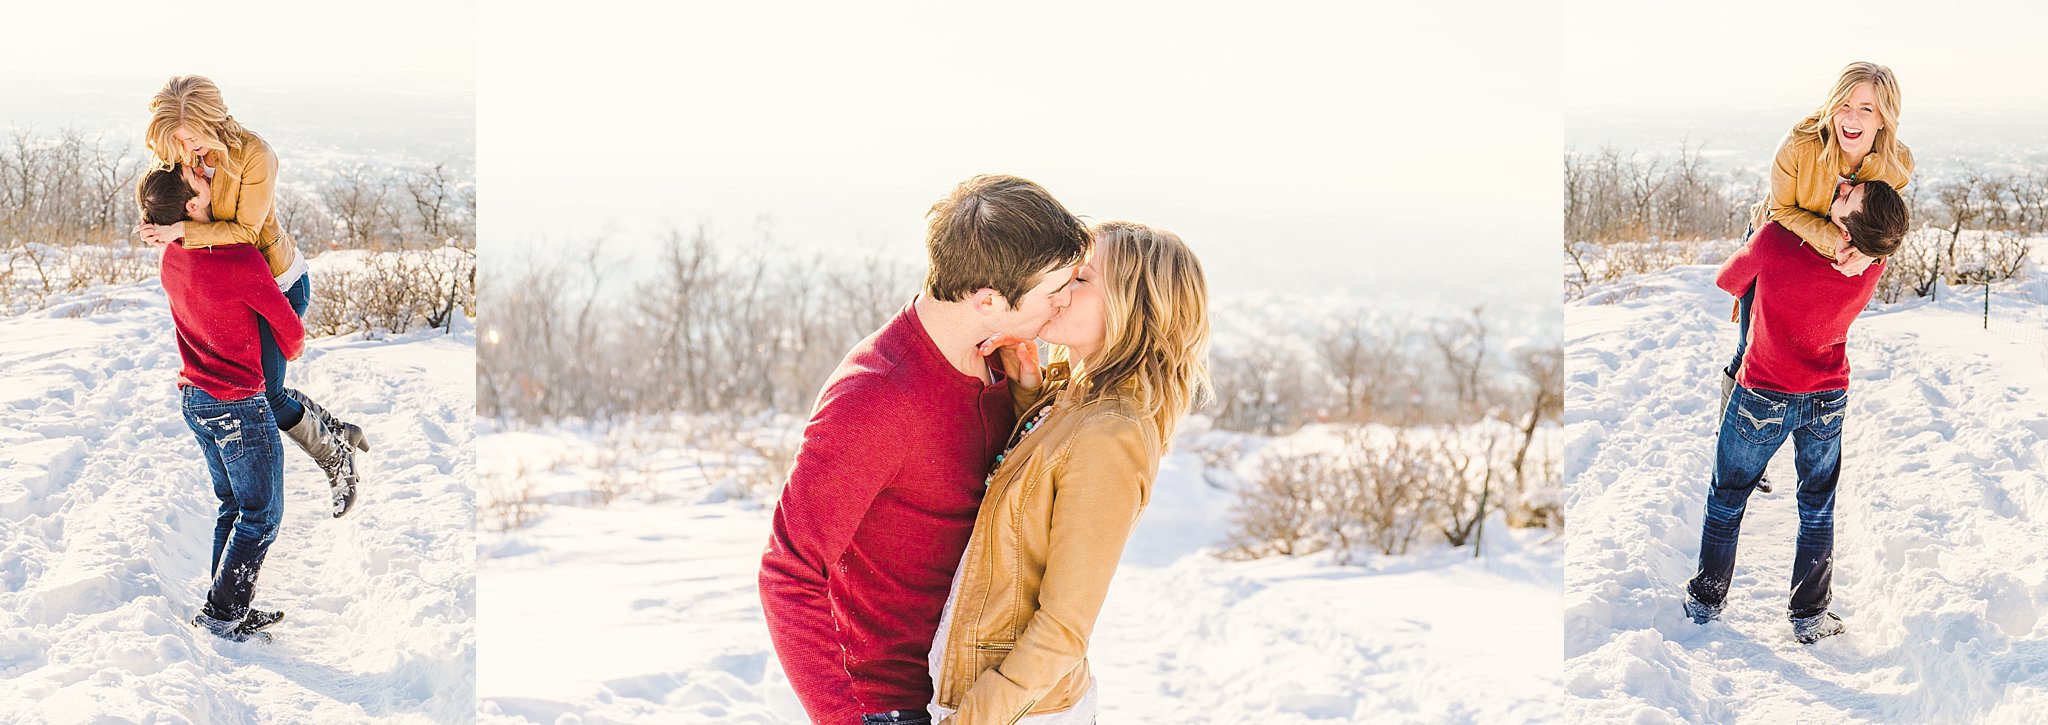 Salt Lake City,Utah,Wedding,couple,engagement photos,layton,outdoor,winter,